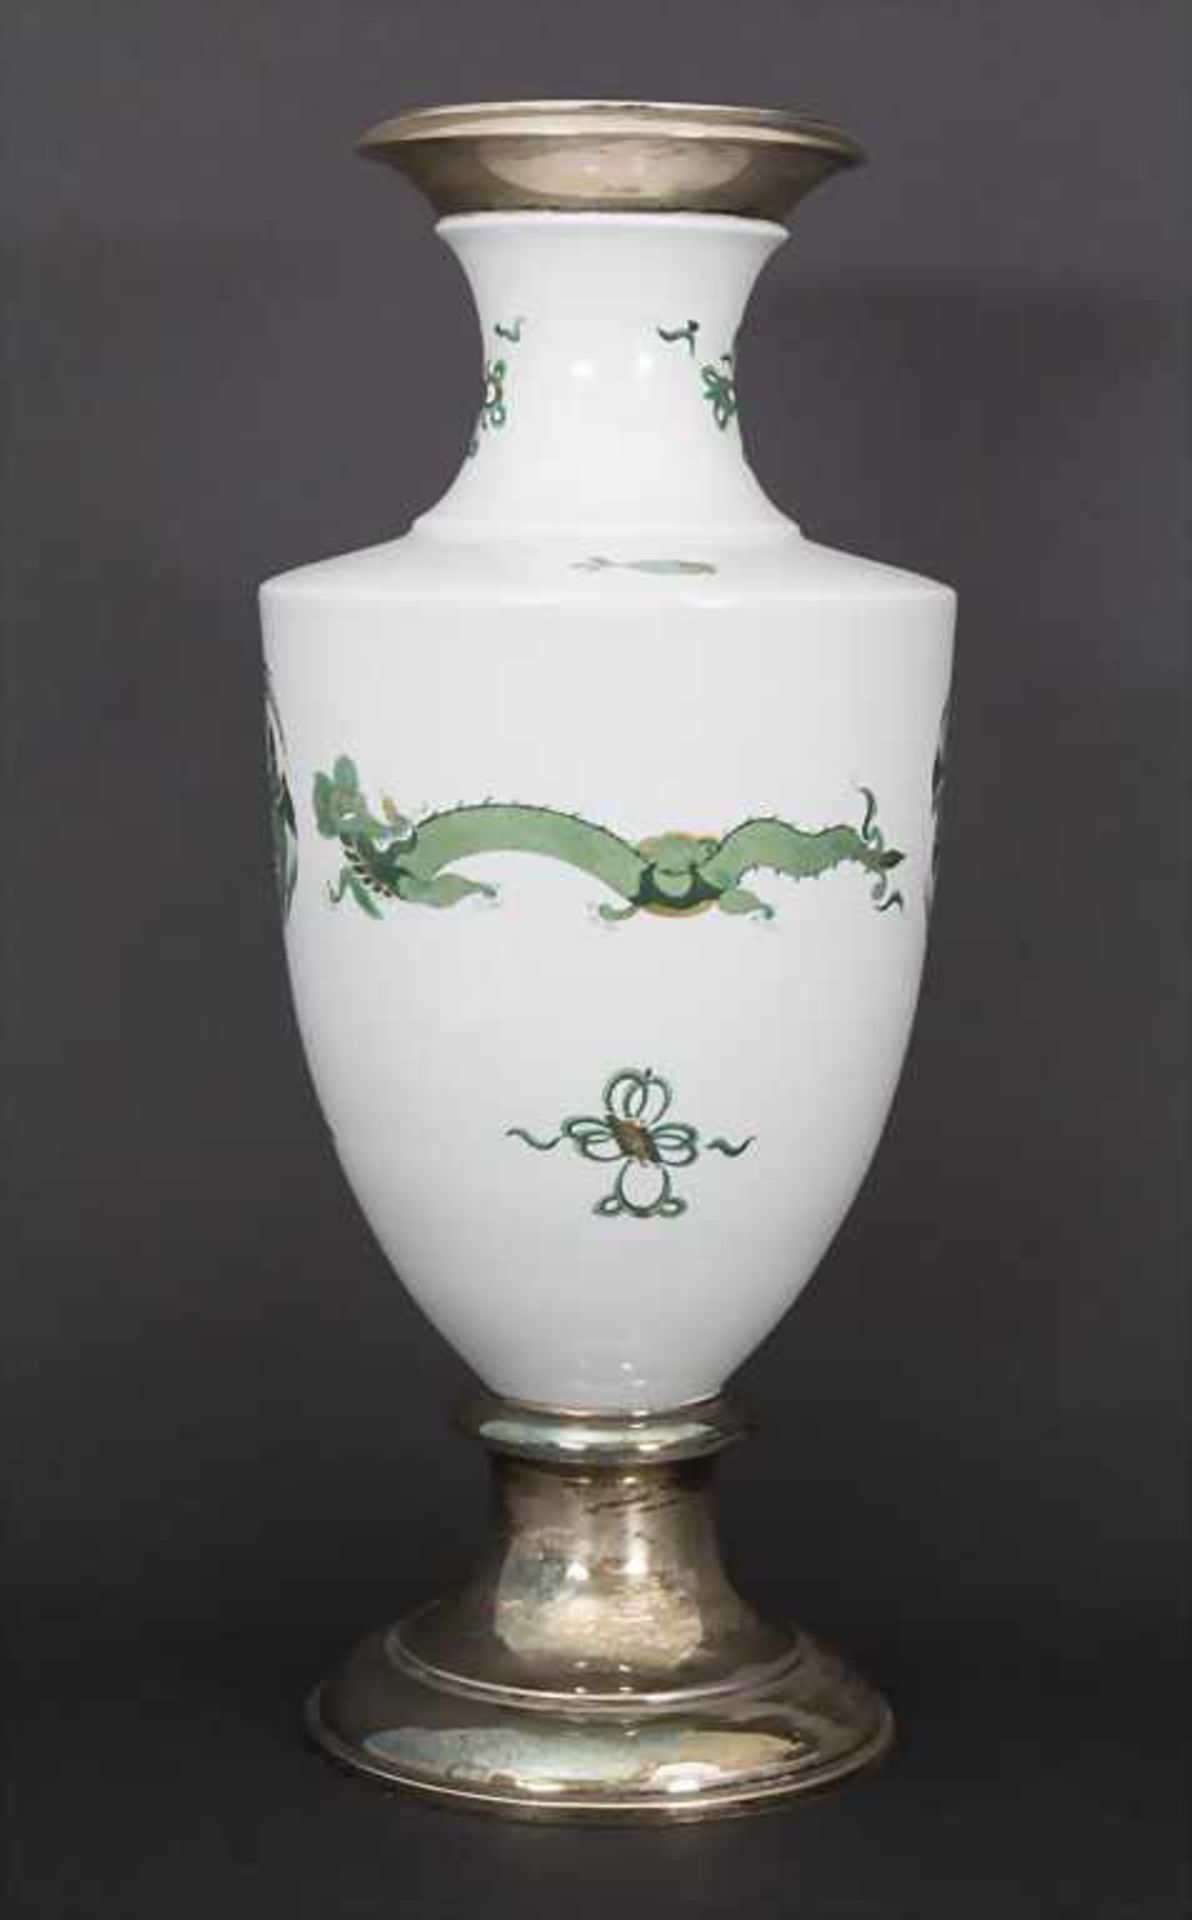 Amphoravase 'Grüner Drache' mit Silbermontierung / An amphora vase 'Green Dragon' with silver mount, - Image 4 of 8